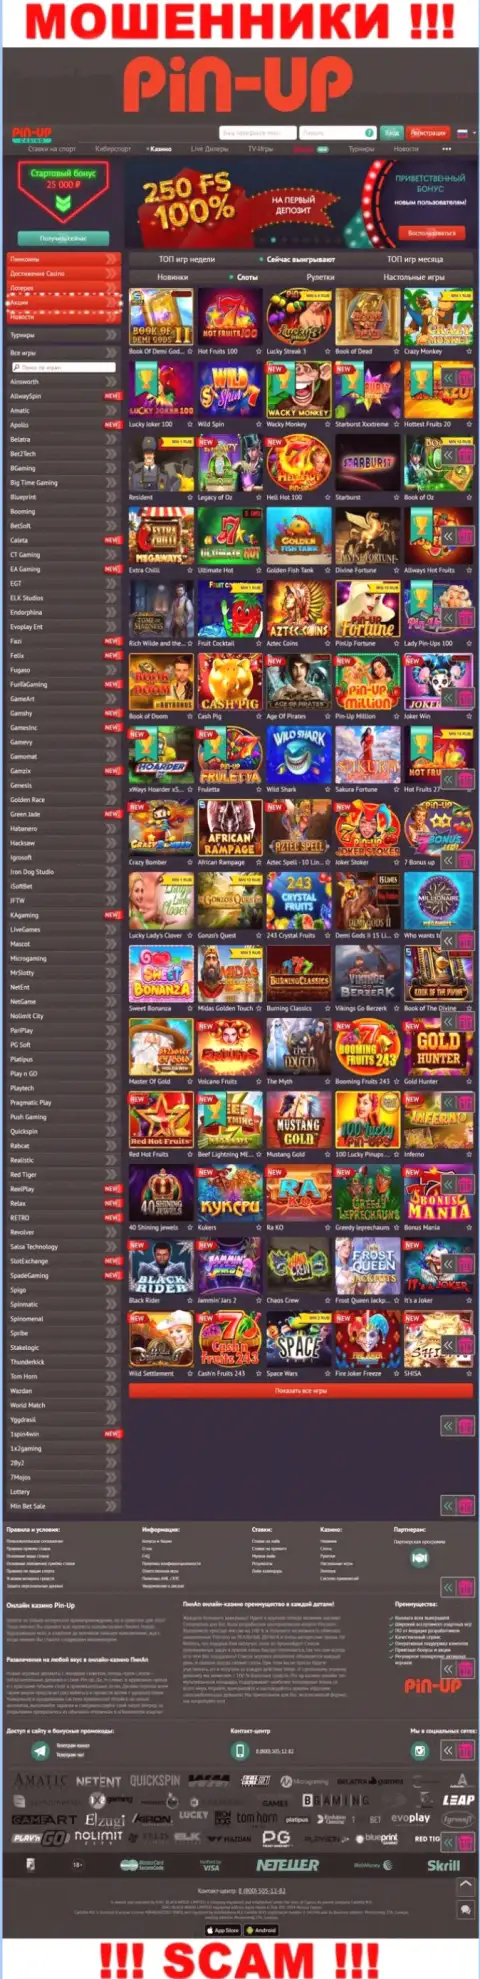 Pin-Up Casino - это официальный веб-сервис интернет-махинаторов Pin Up Casino